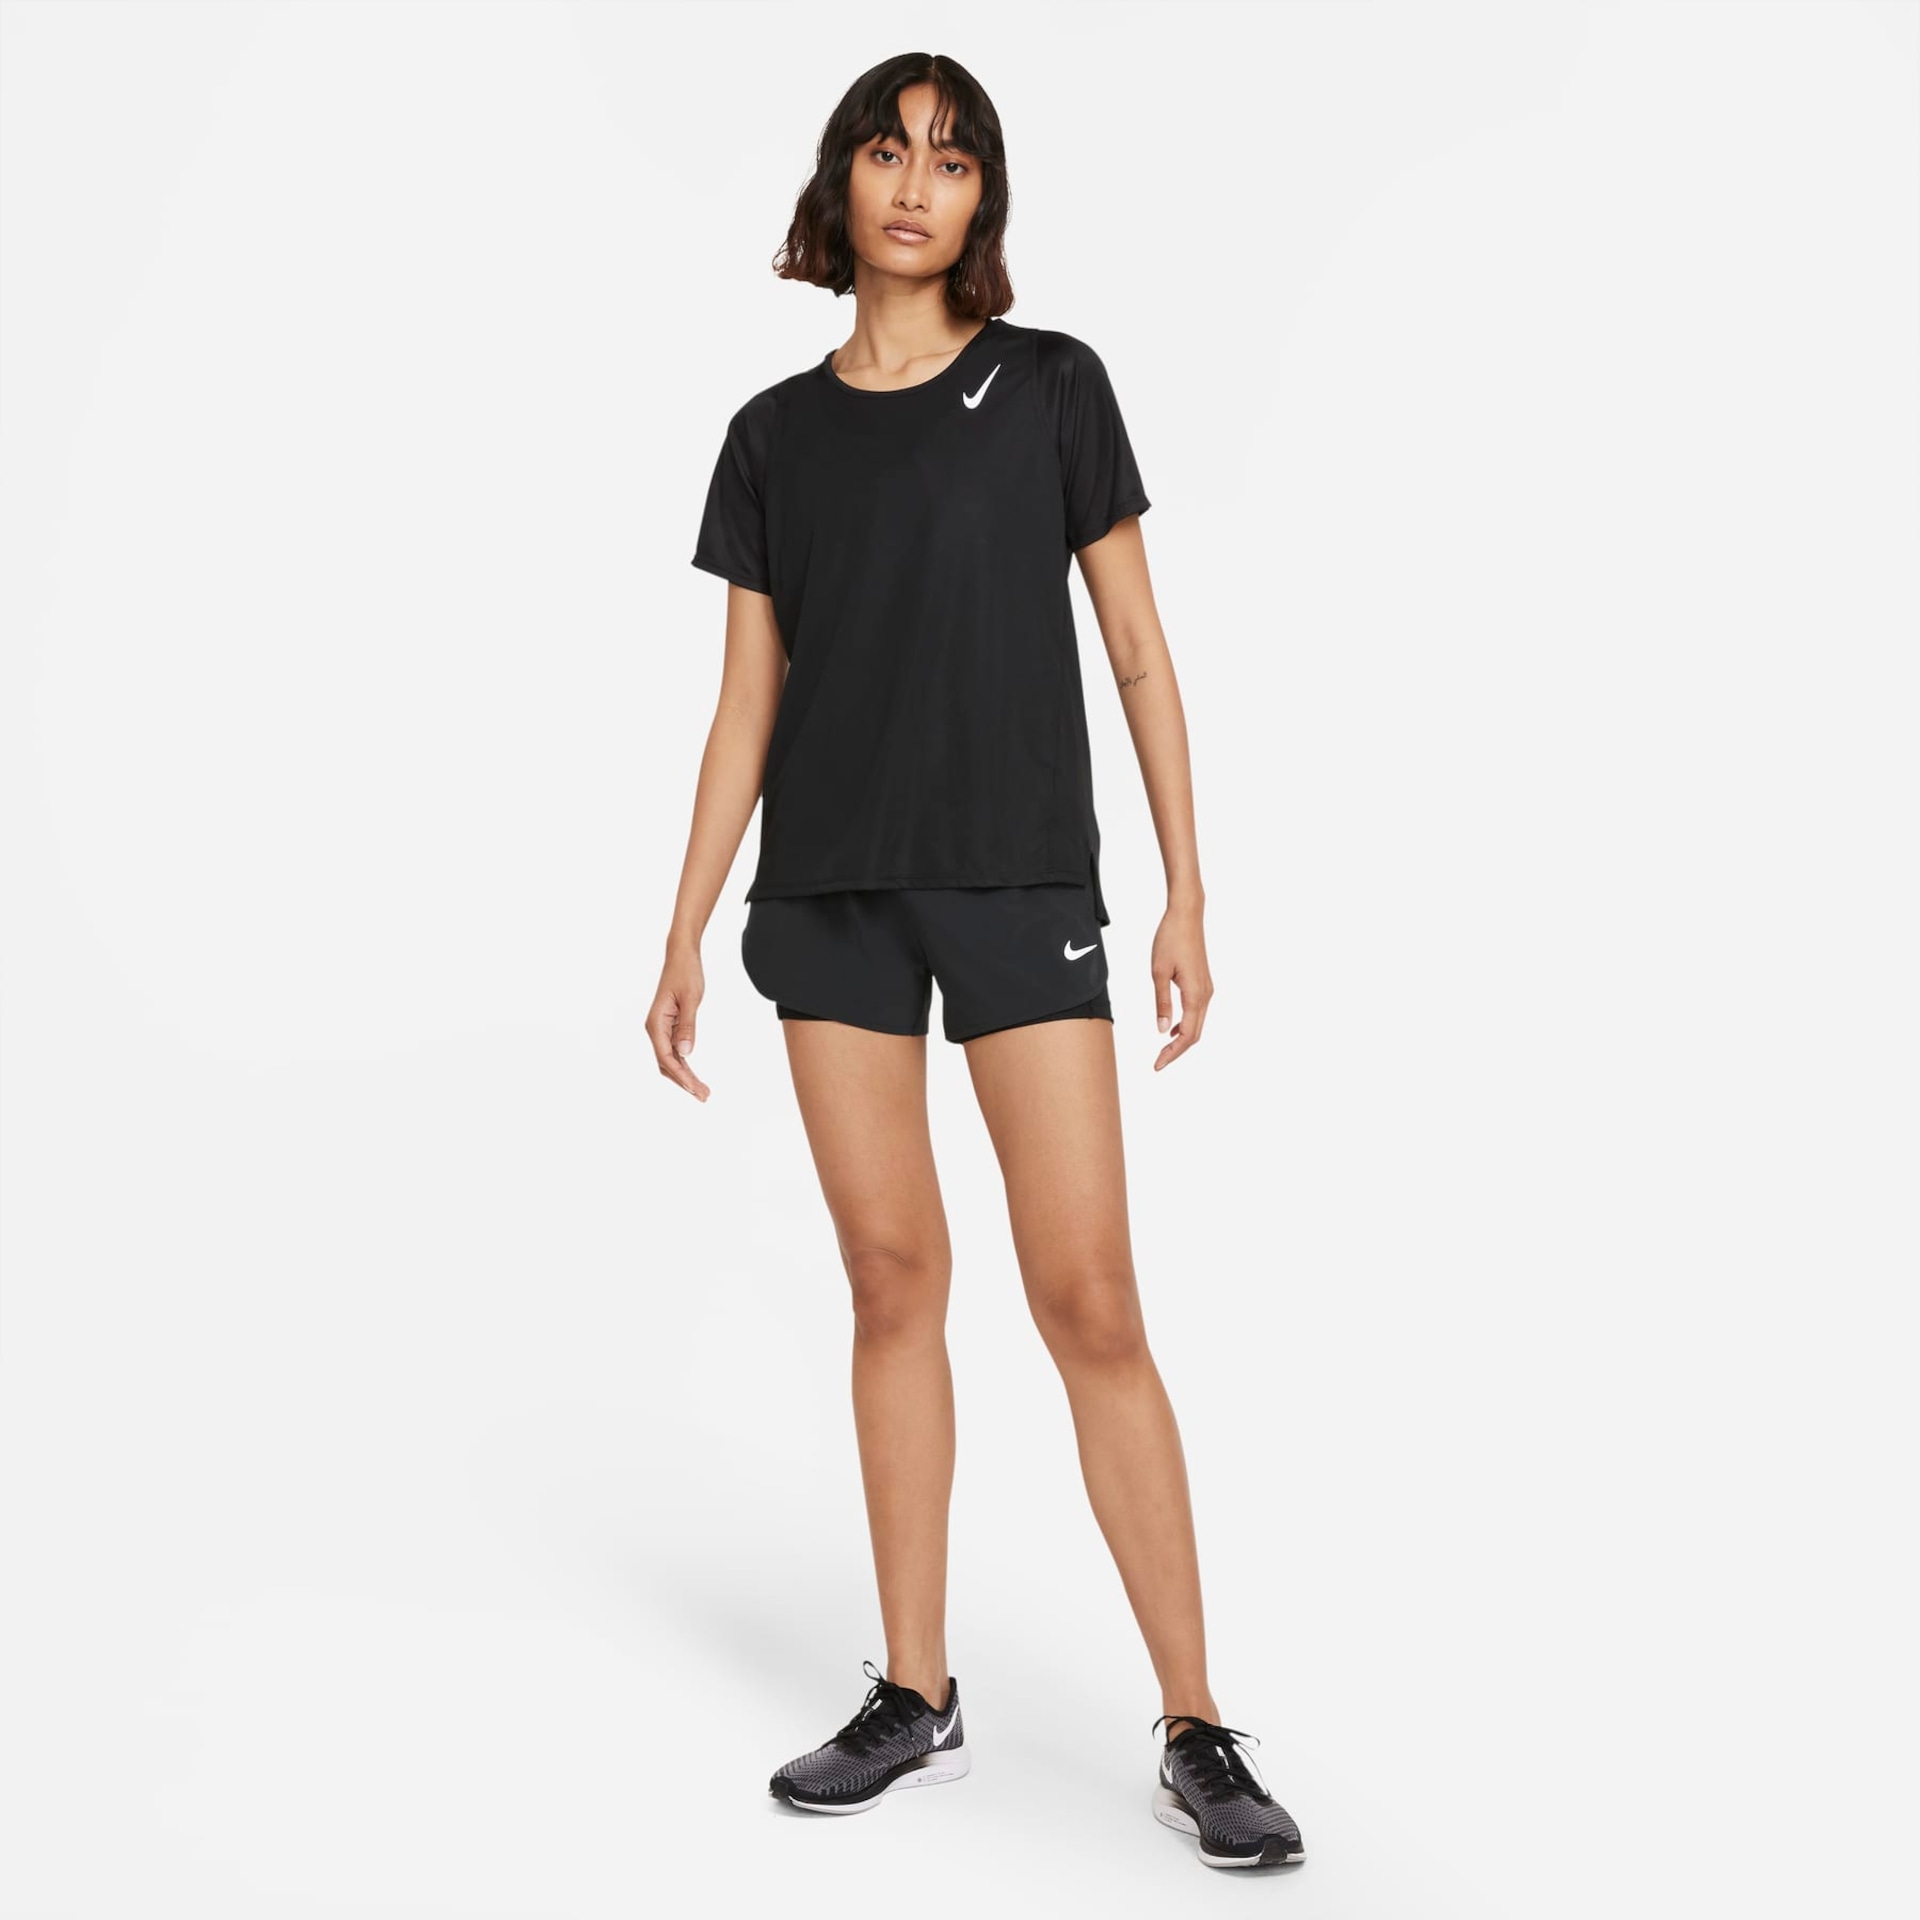 Camiseta Nike Dri-FIT Race Feminina - Foto 6